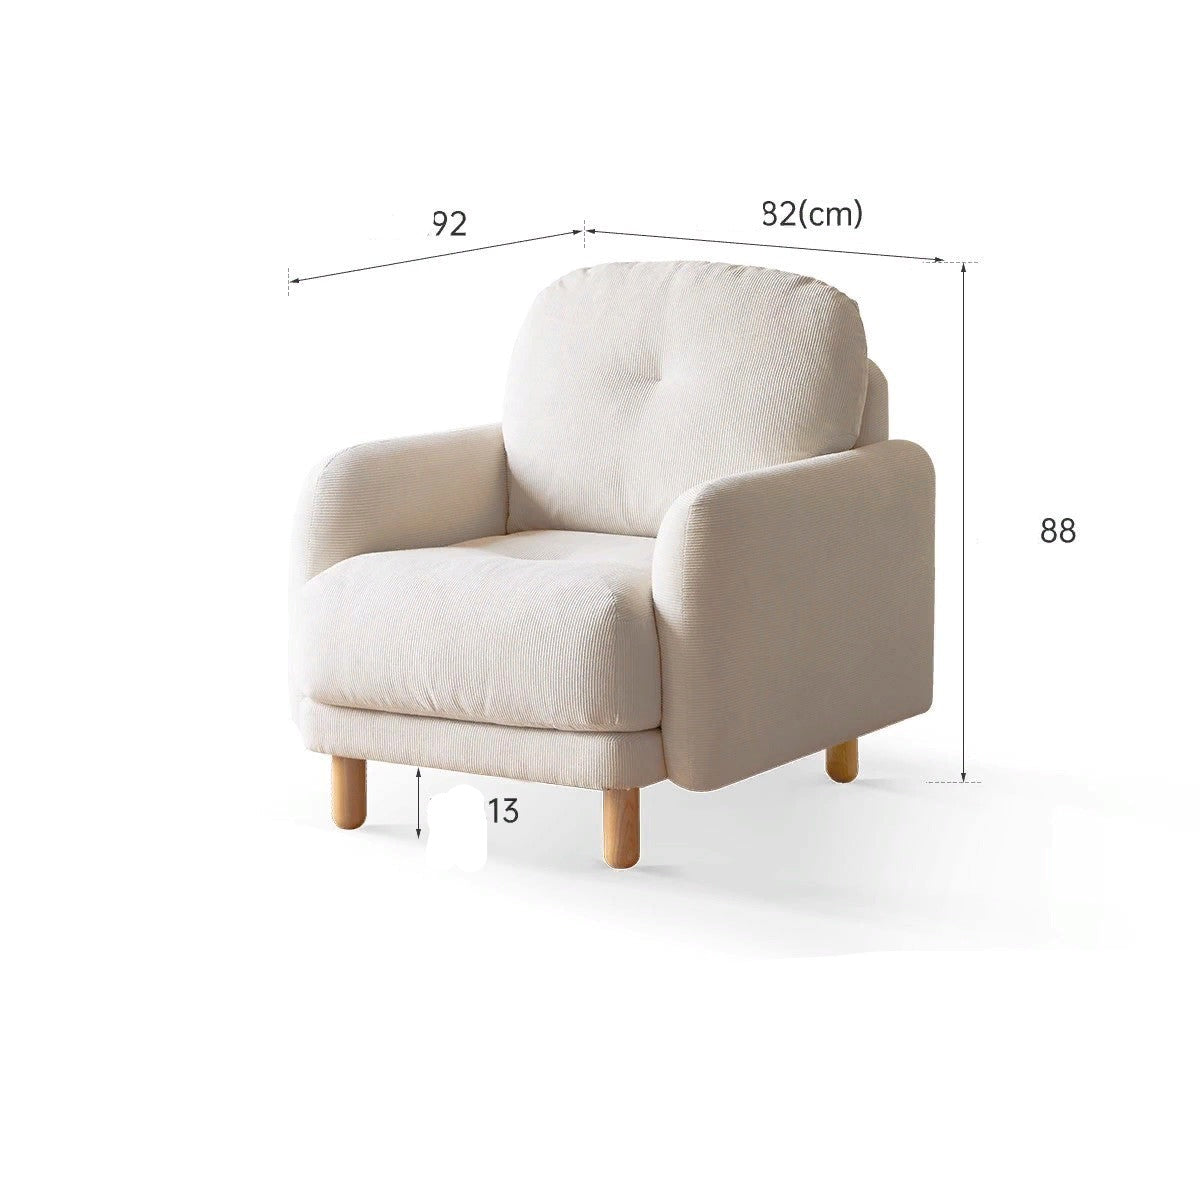 Cream Style goose down Leisure Fabric armchair)